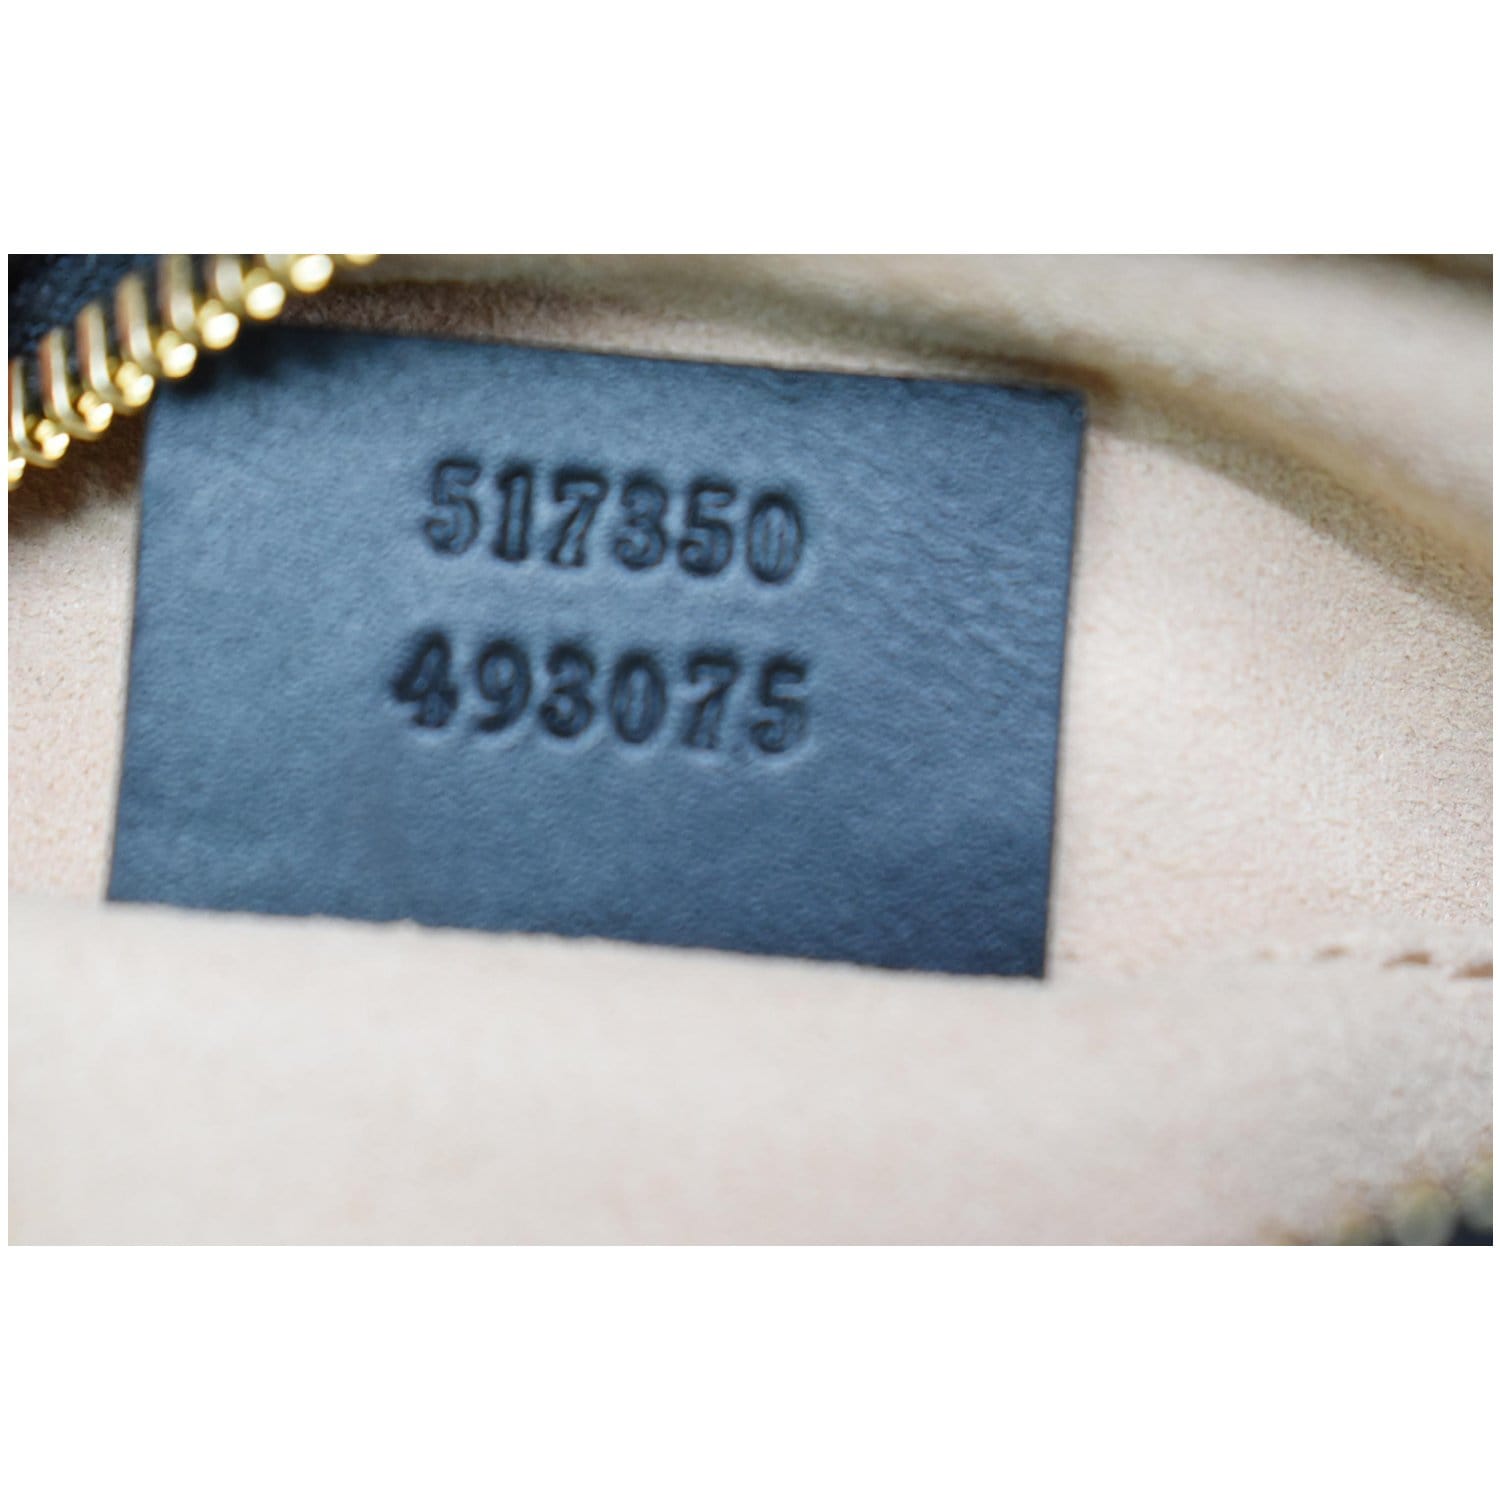 GUCCI Ophidia Mini Web Suede Leather Crossbody Bag Black 517350 - 20%